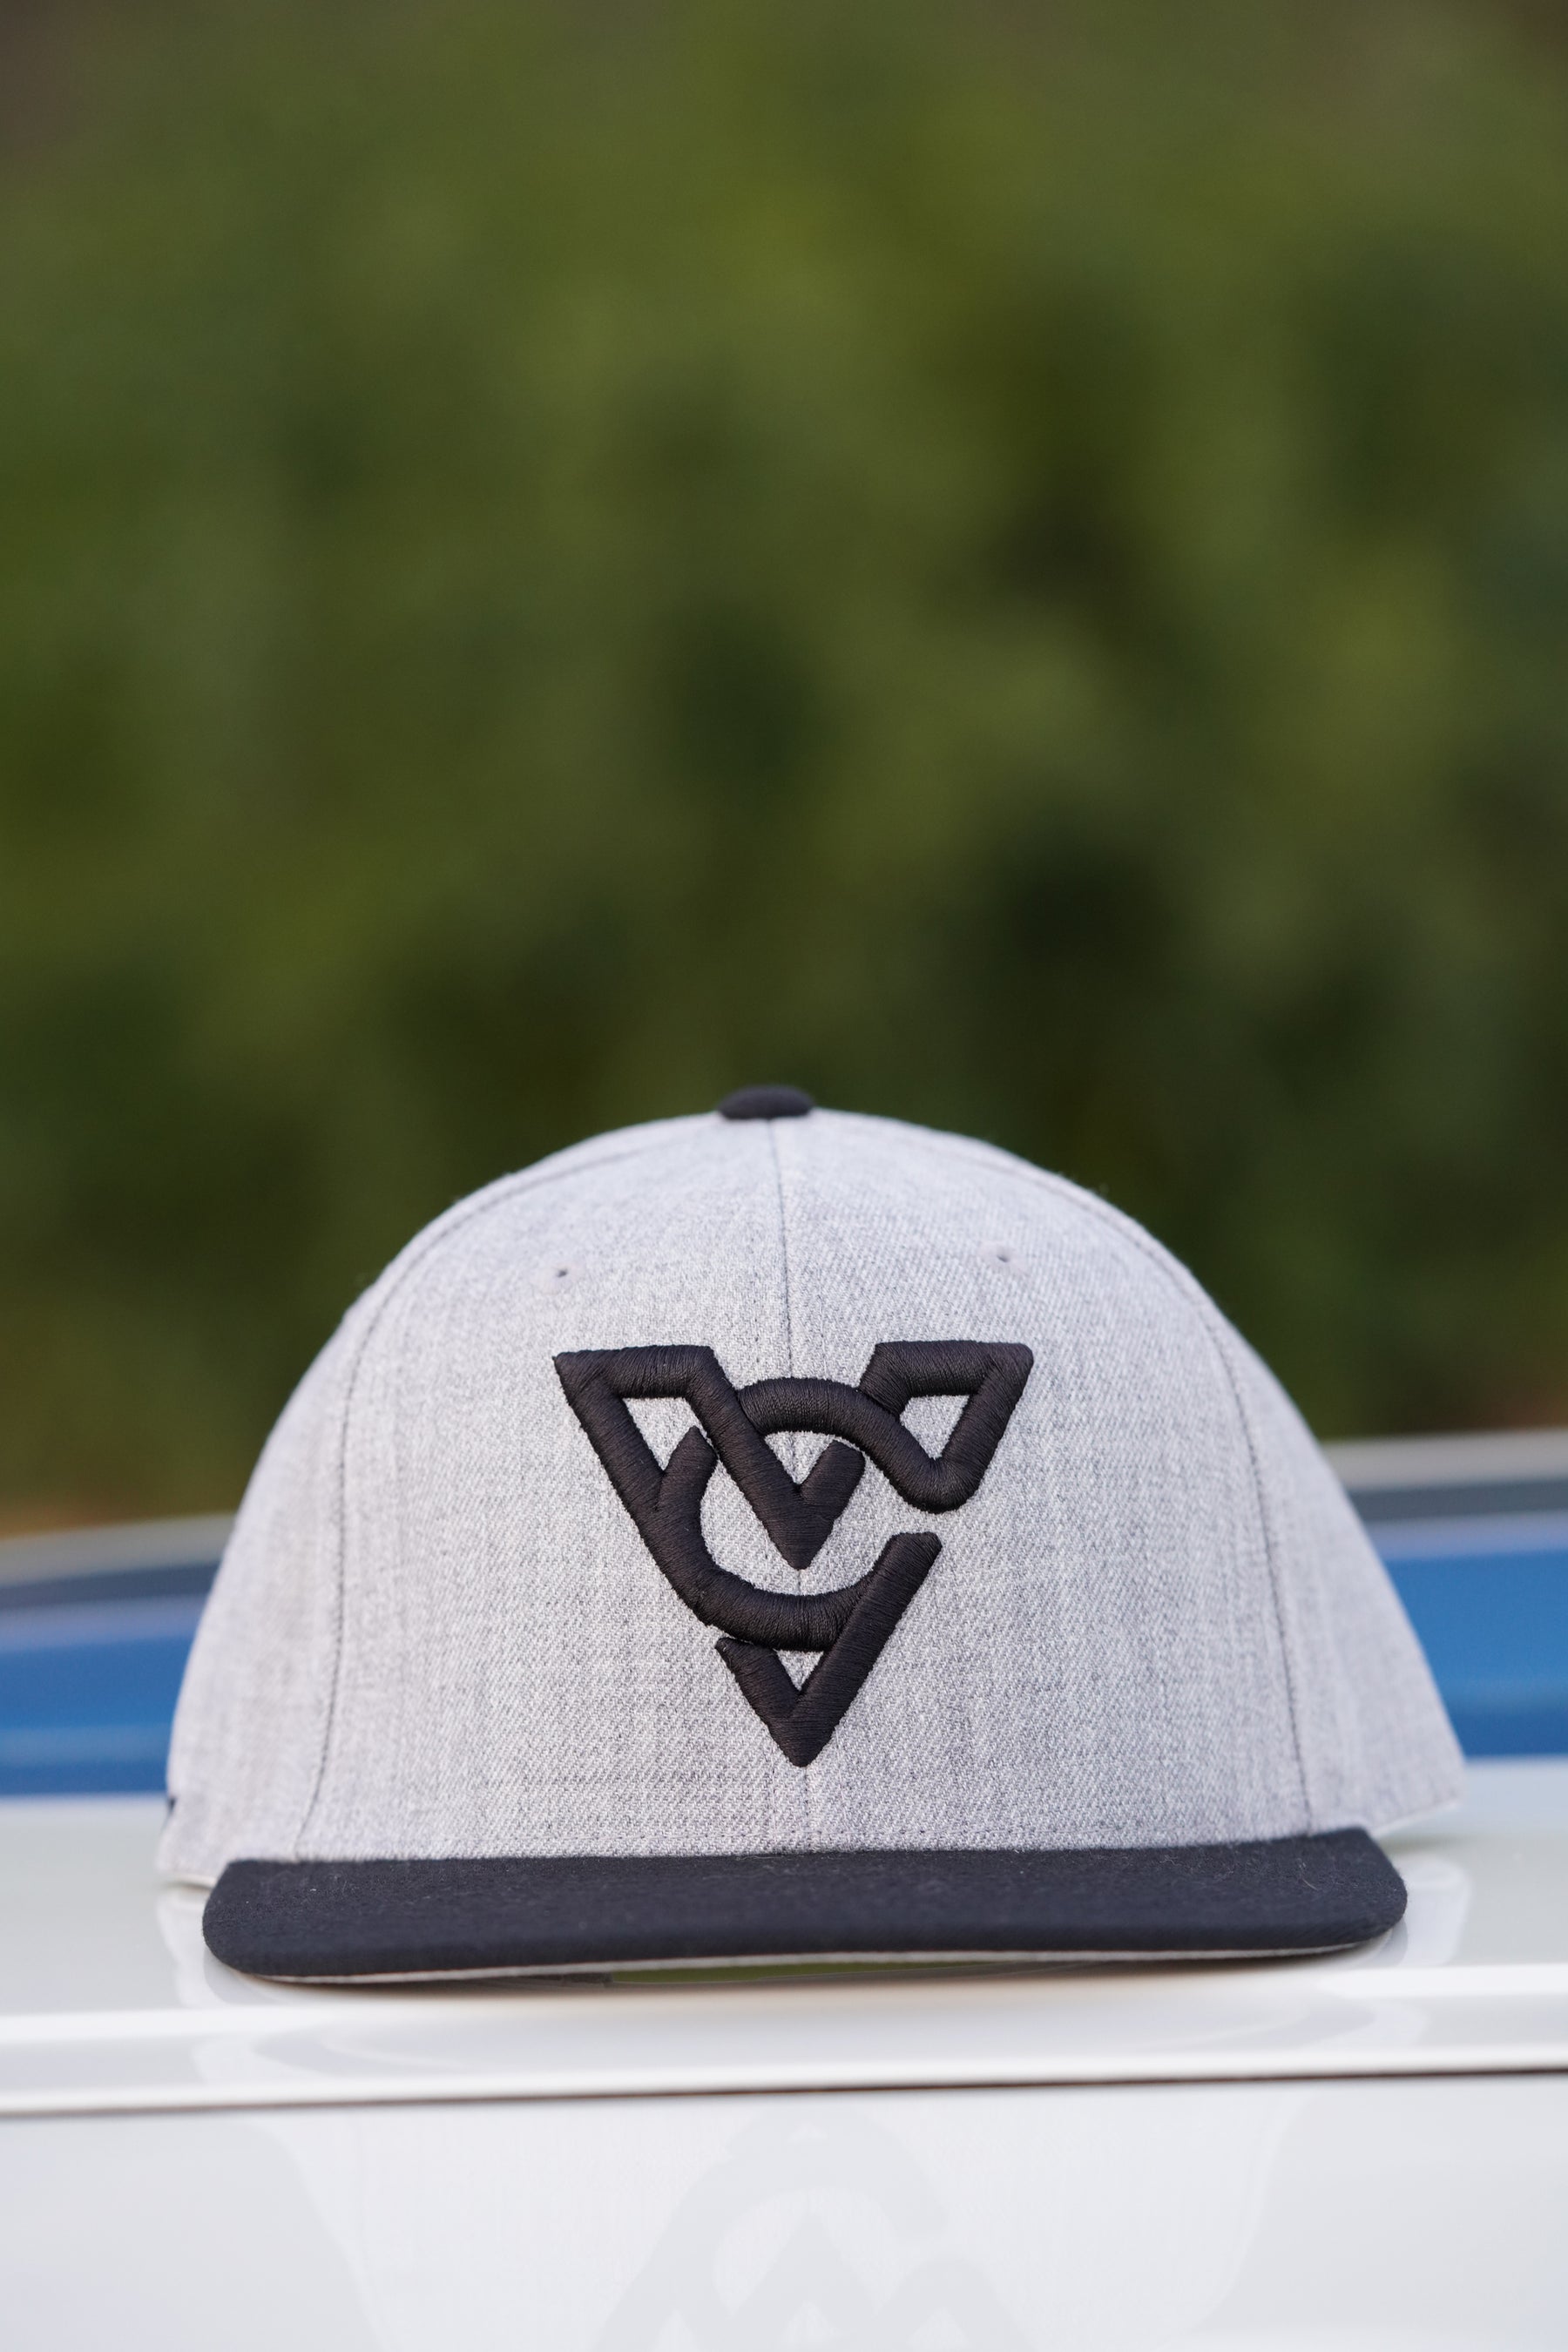 VC PUFF HAT (Heather Grey/Black Puff)